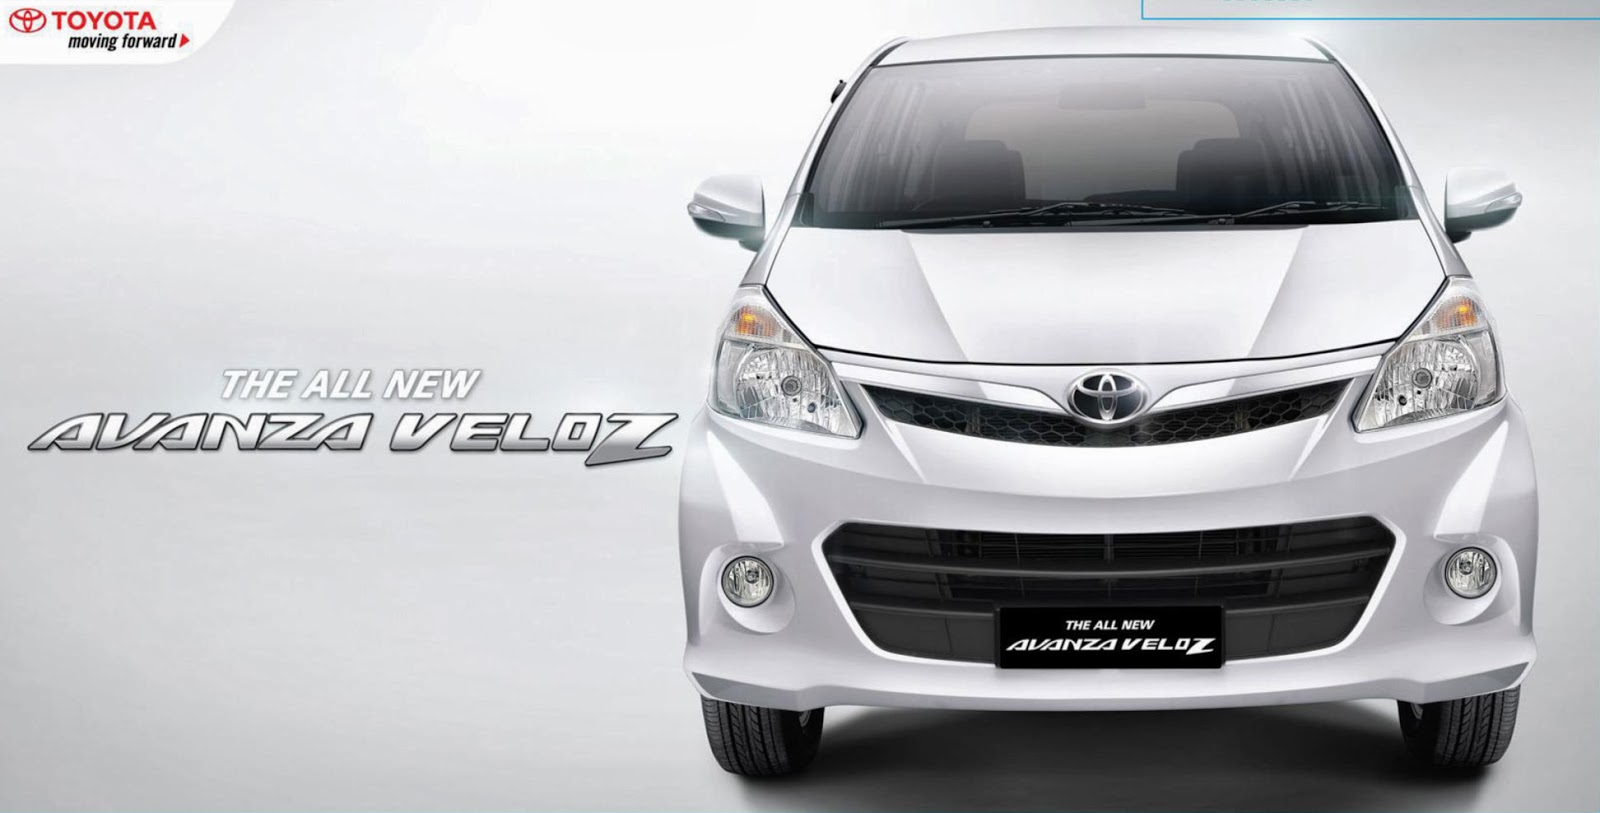 Spesifikasi Mobil Toyota Avanza Veloz Kumpulan Tips dan 